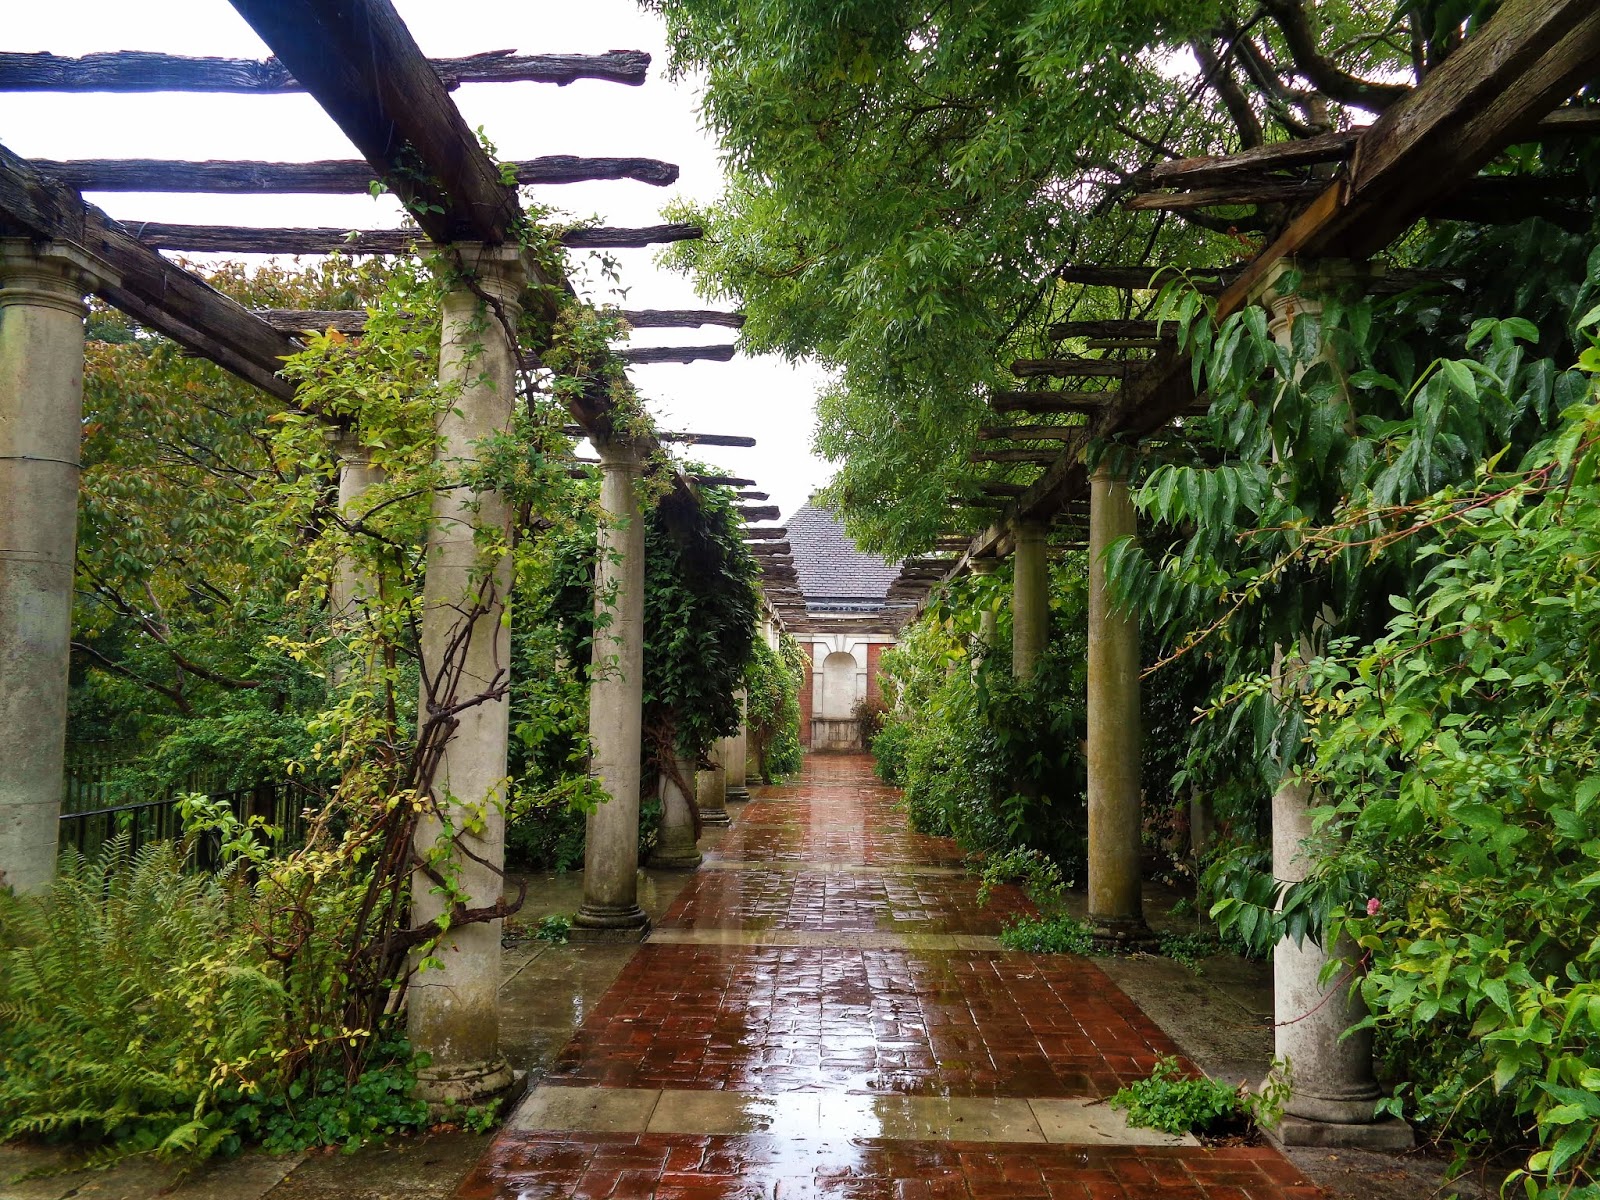 Photo Diary: Hampstead Heath Hill Gardens and Pergola in the Rain